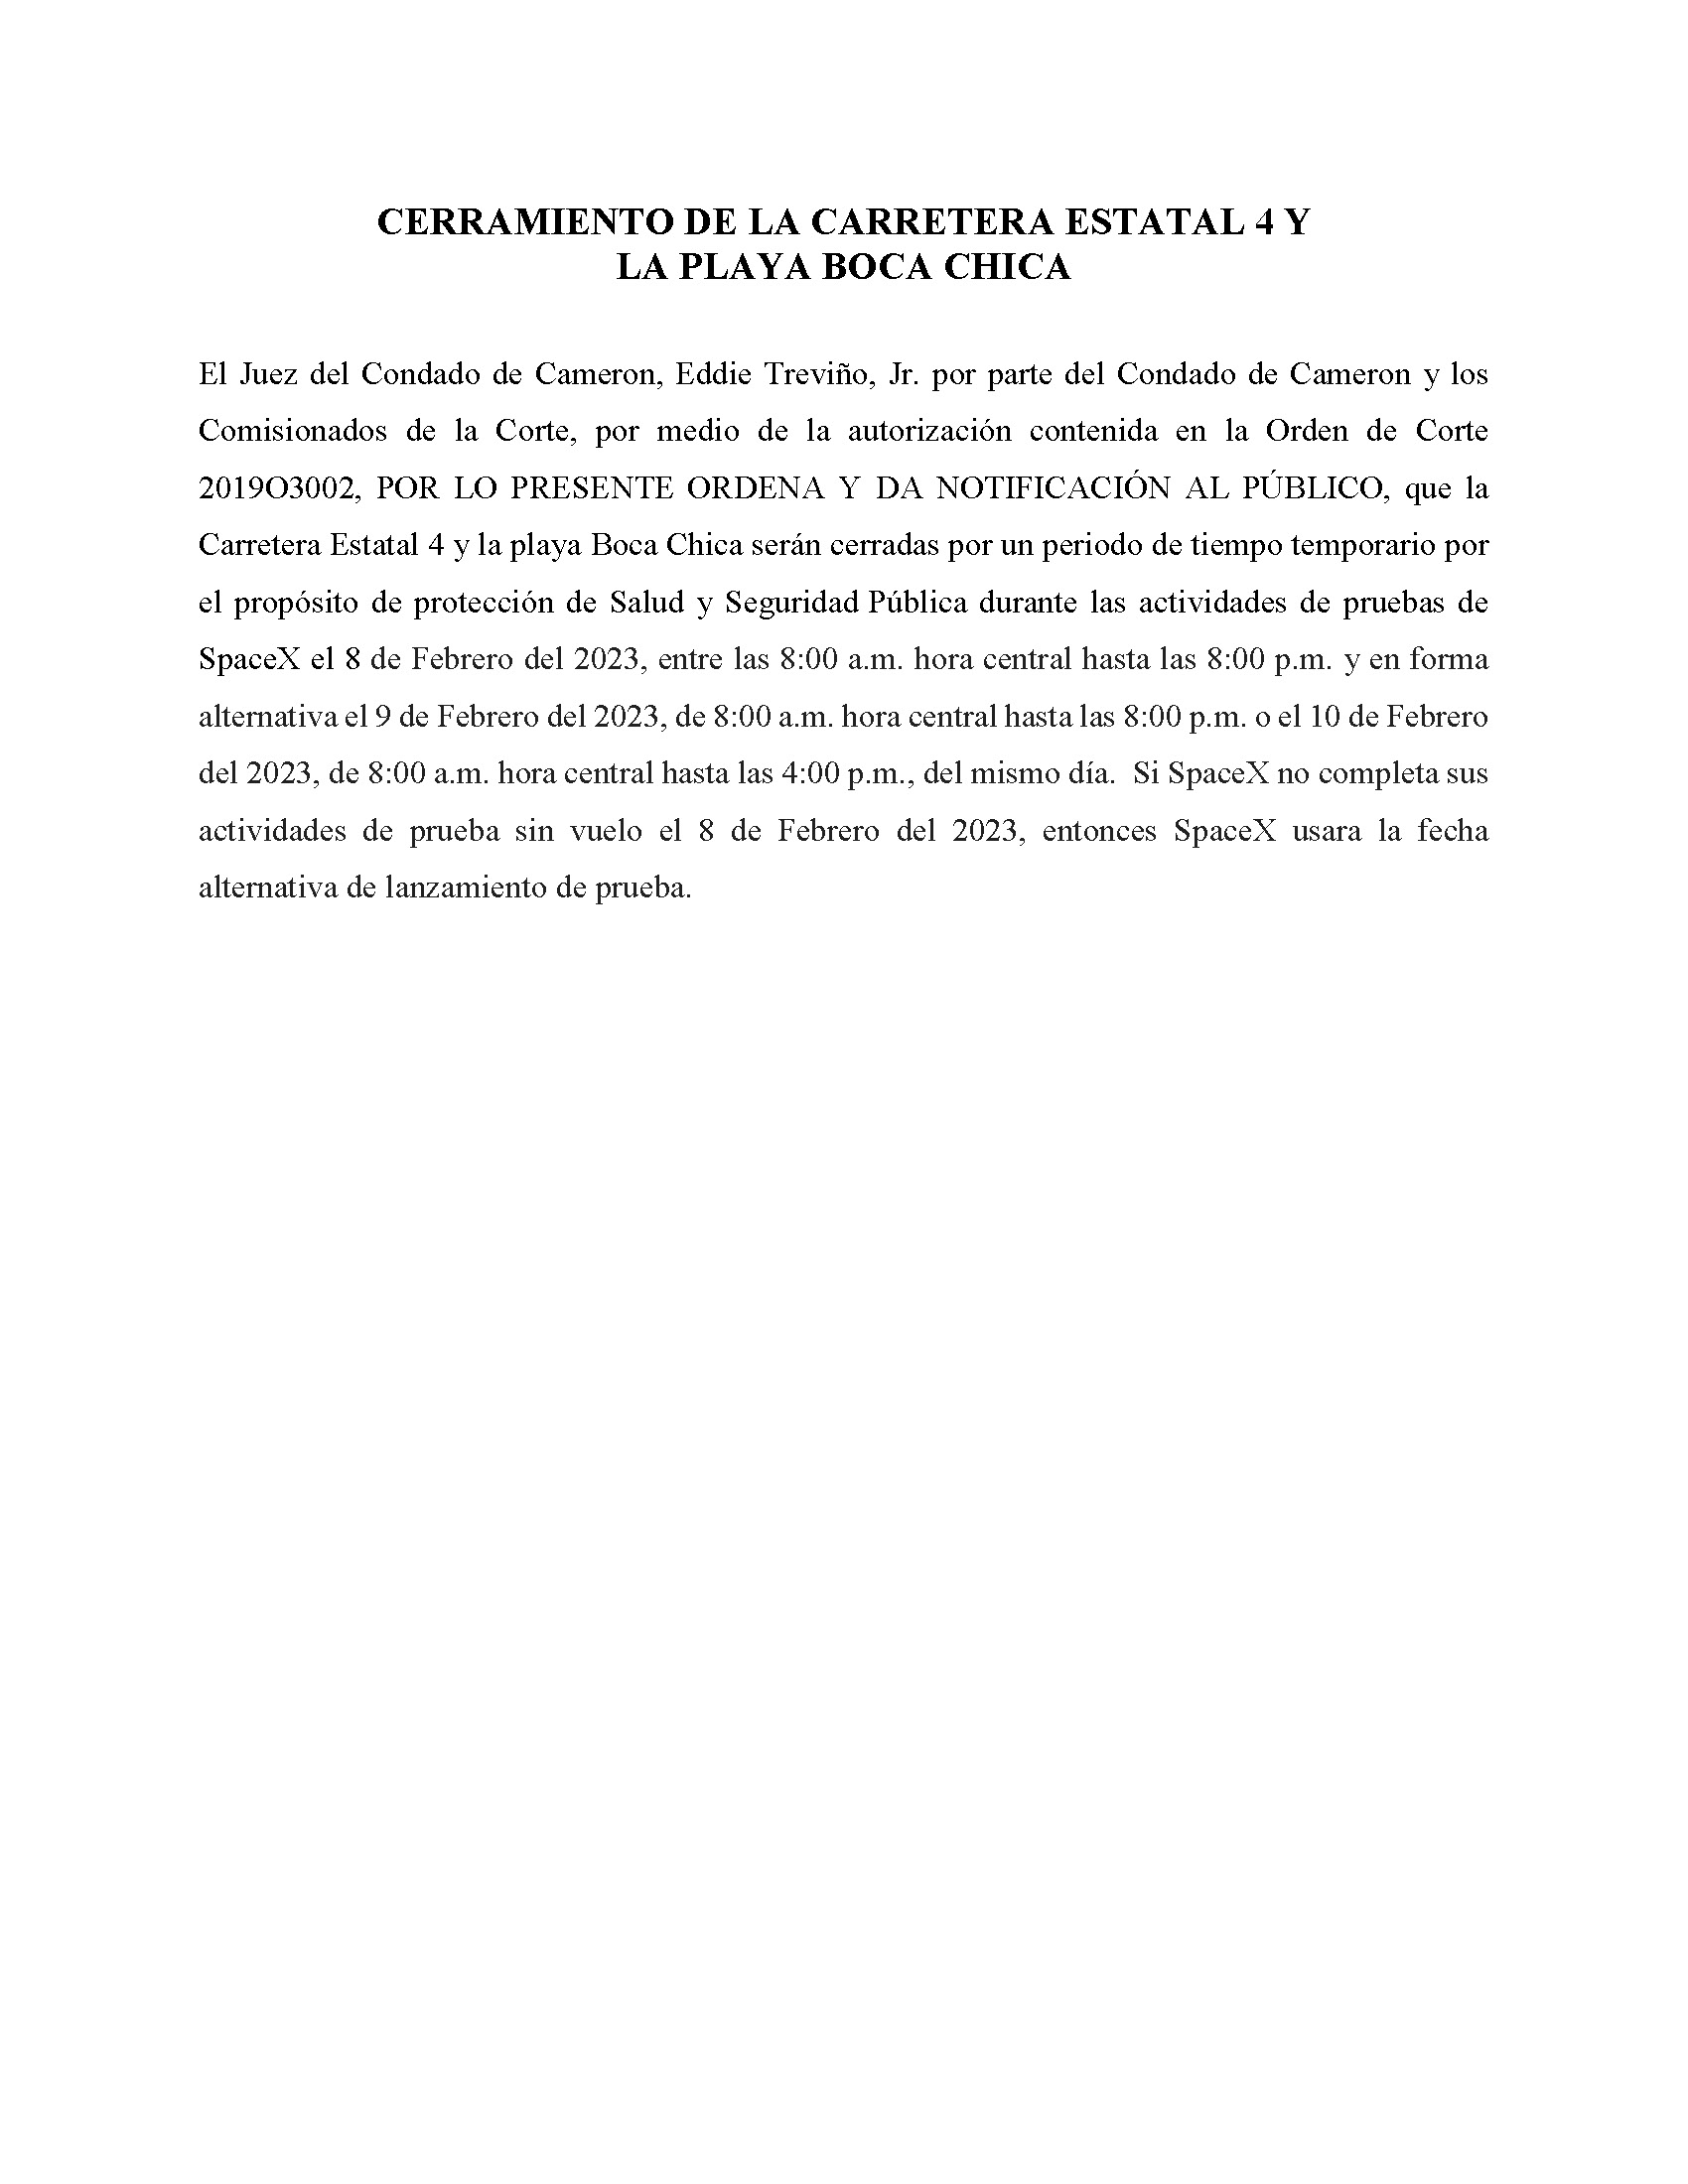 ORDER.CLOSURE OF HIGHWAY 4 Y LA PLAYA BOCA CHICA.SPANISH.02.08.23